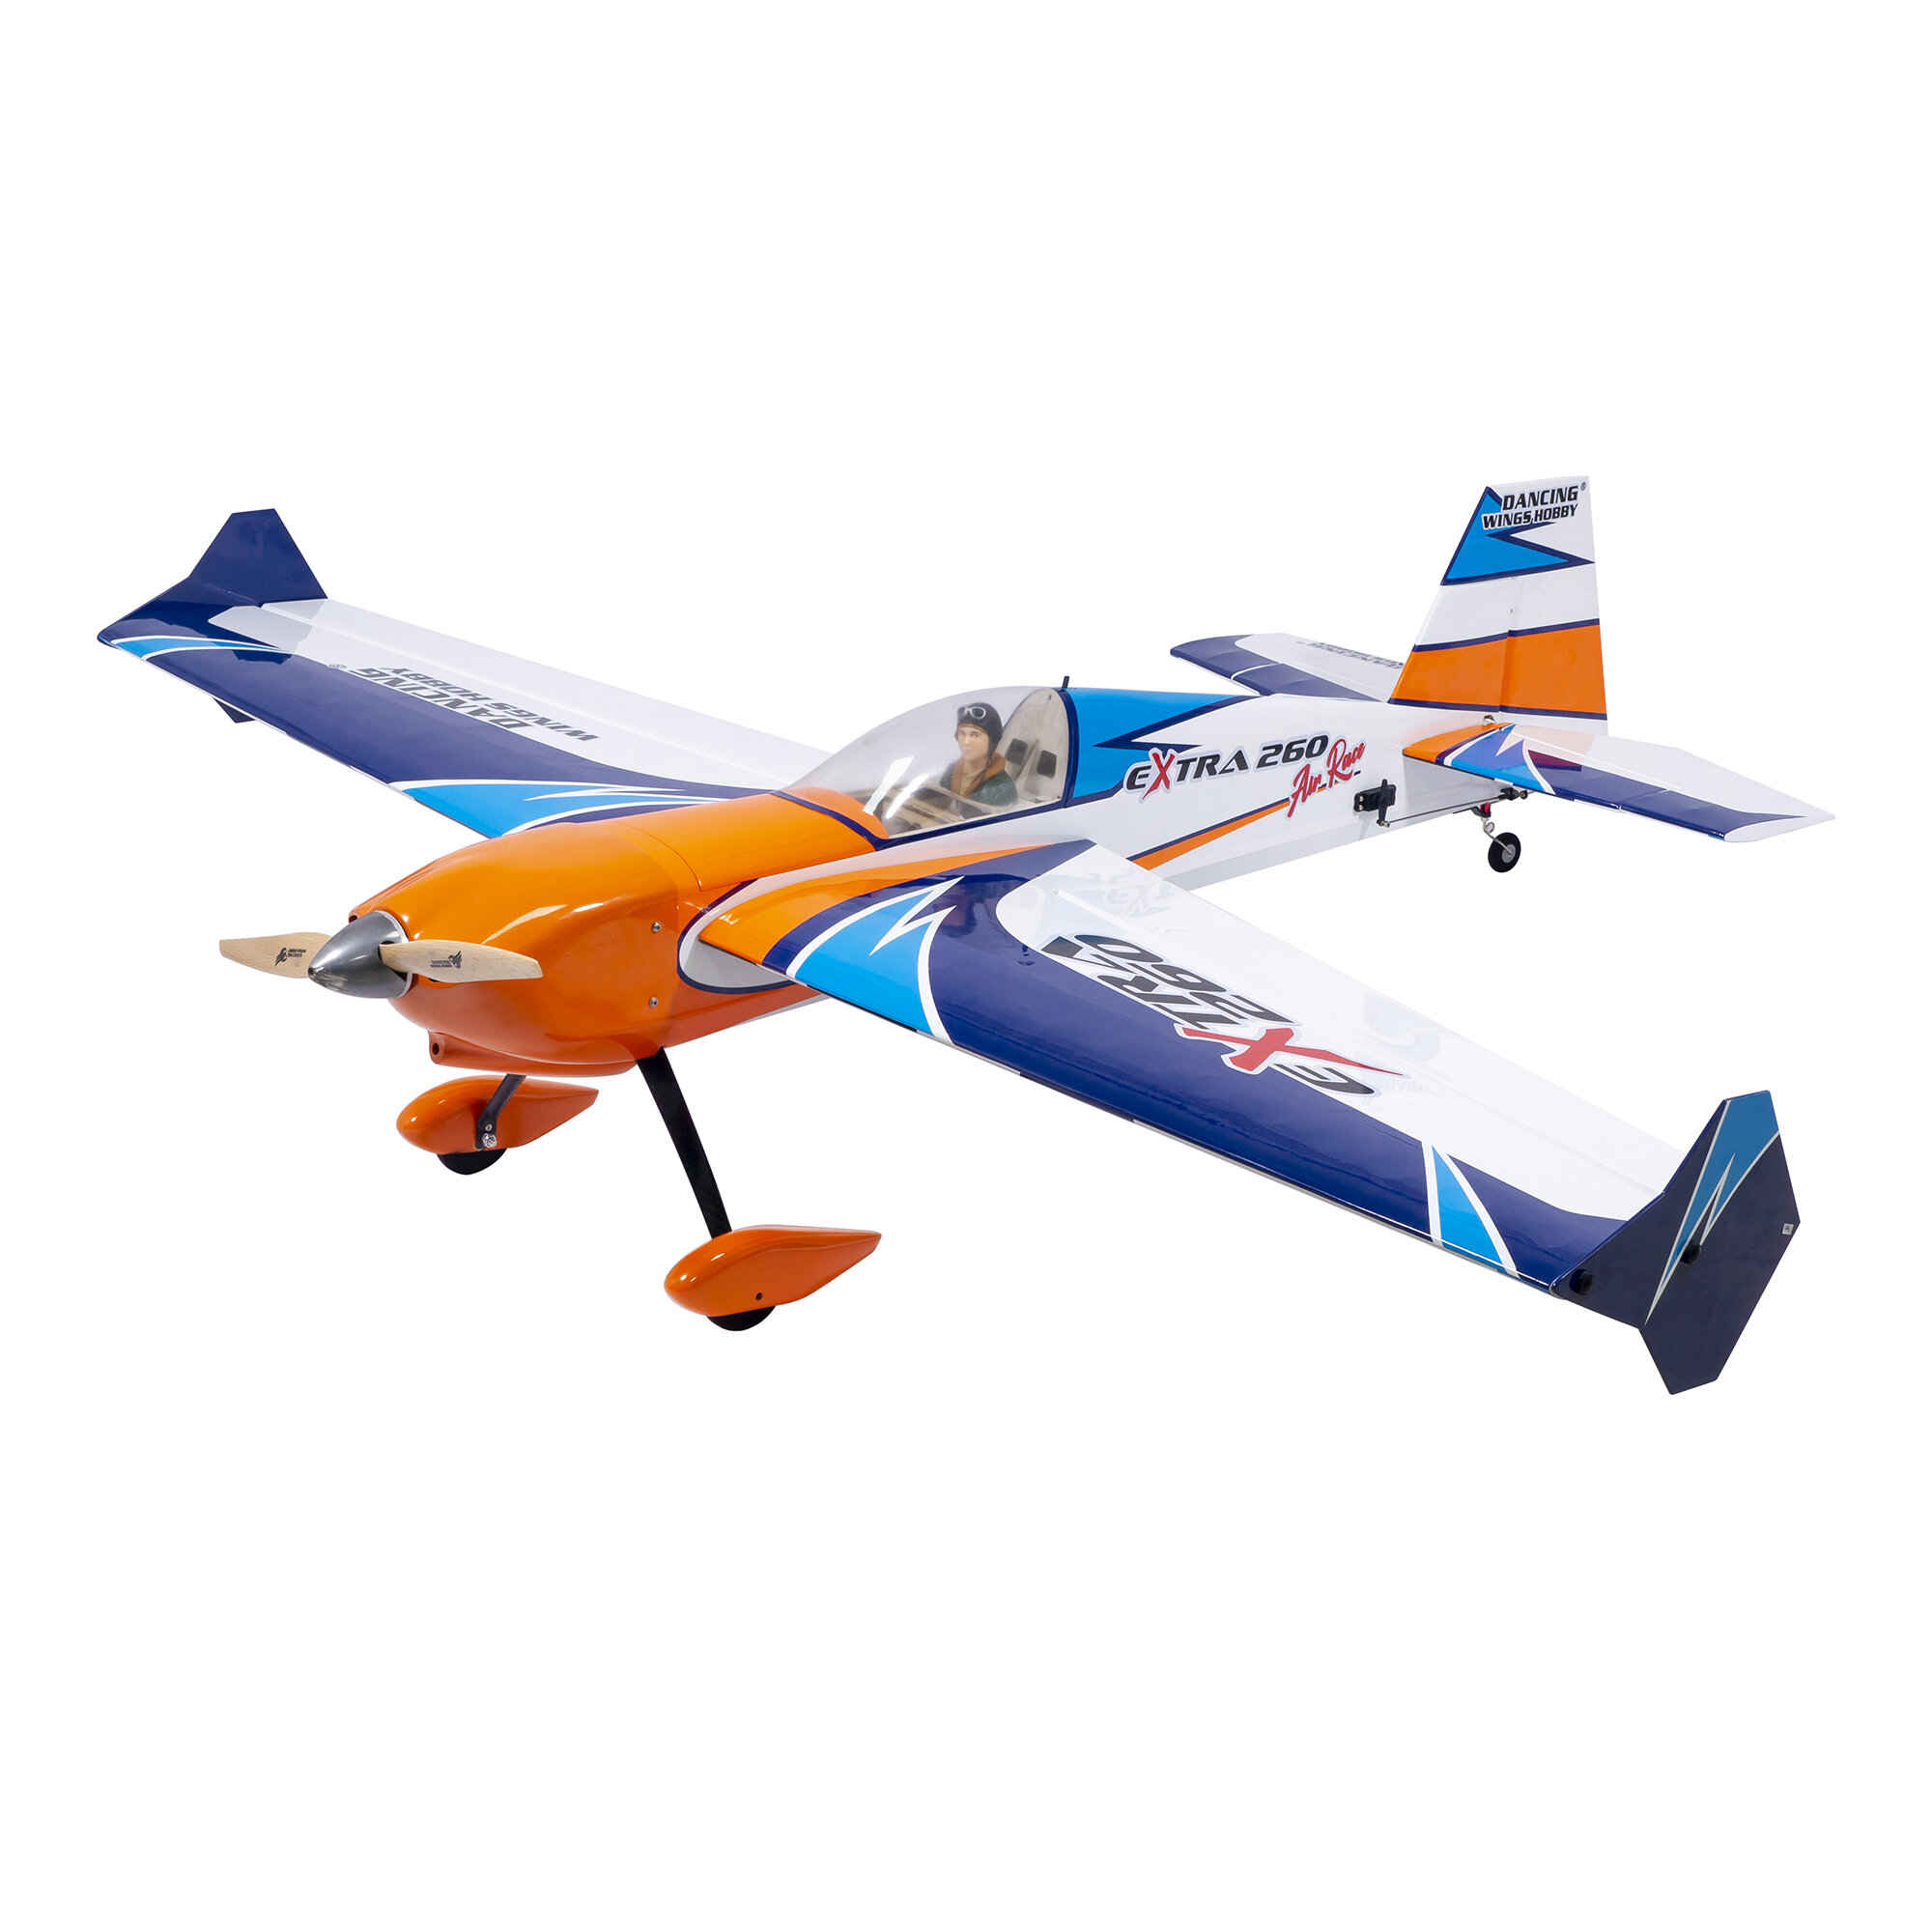 Dancing Wings Hobby XCG02 Extra-260 1:5 Scale 1540mm Wingspan 3D Aerobatics Balsa Wood RC Airplane Trainer KIT/ KIT+Power Combo COD